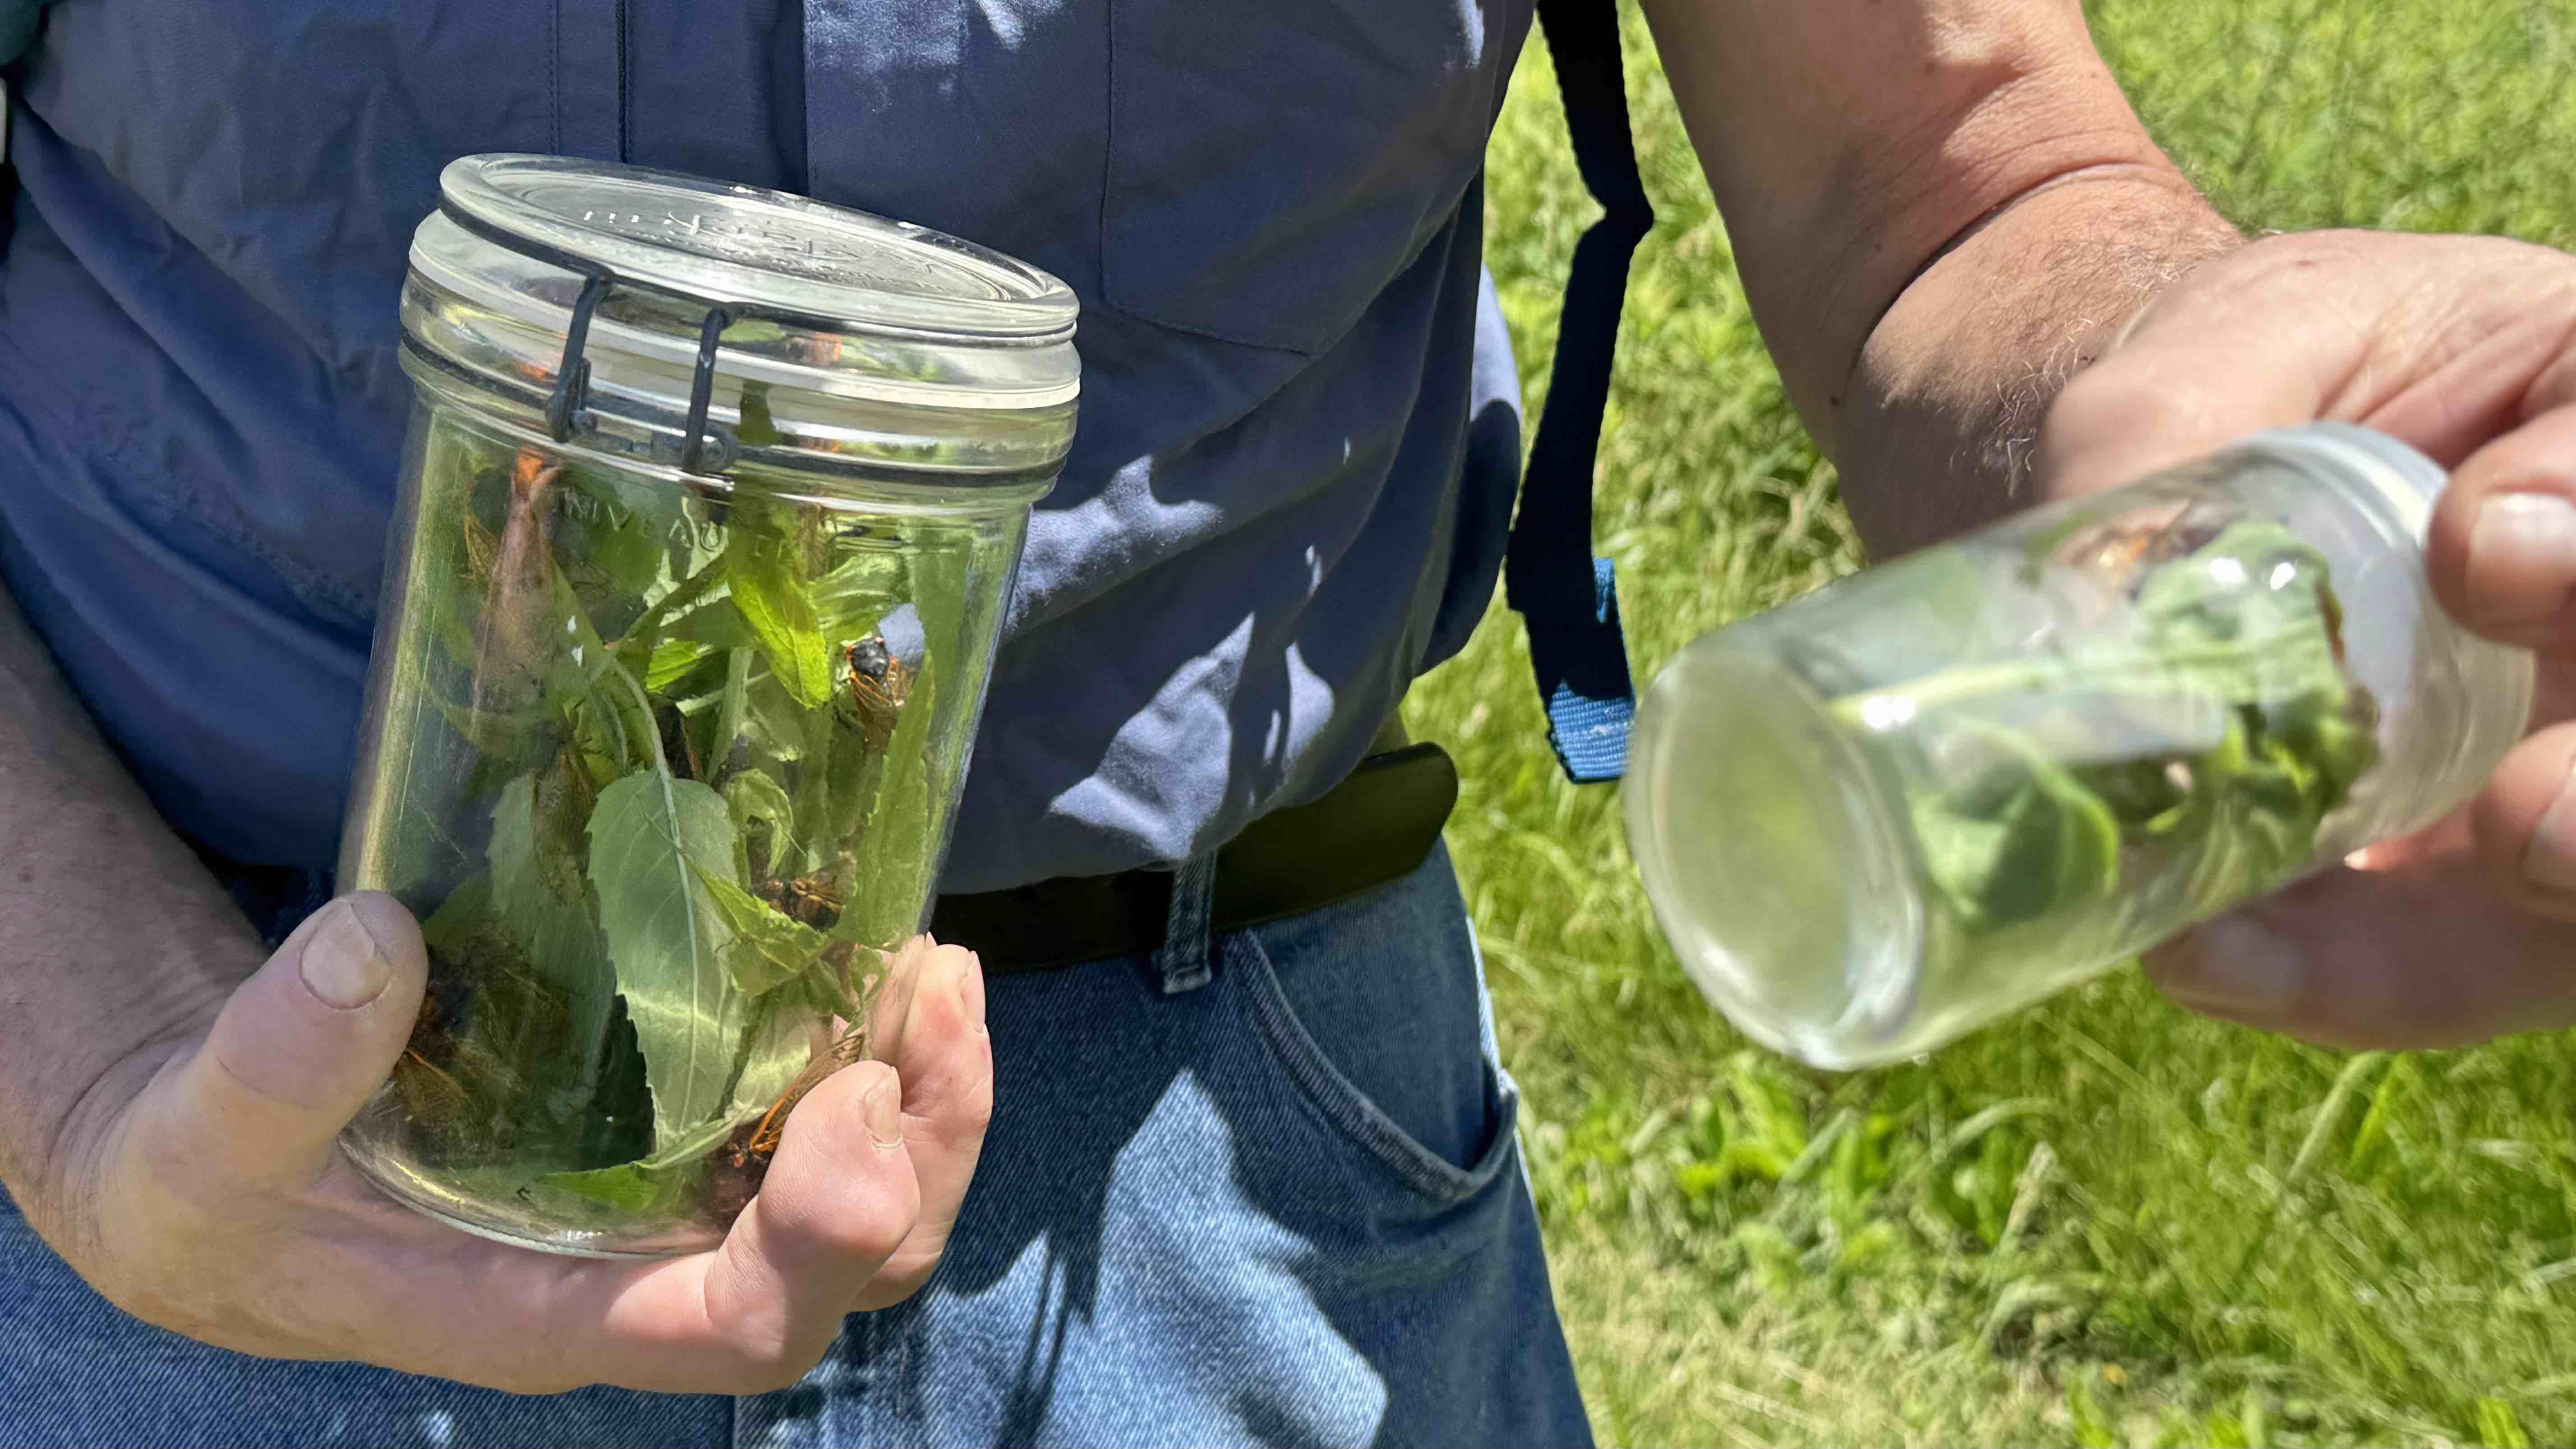 Specimens were placed in jars according to species. (Patty Wetli / WTTW News)